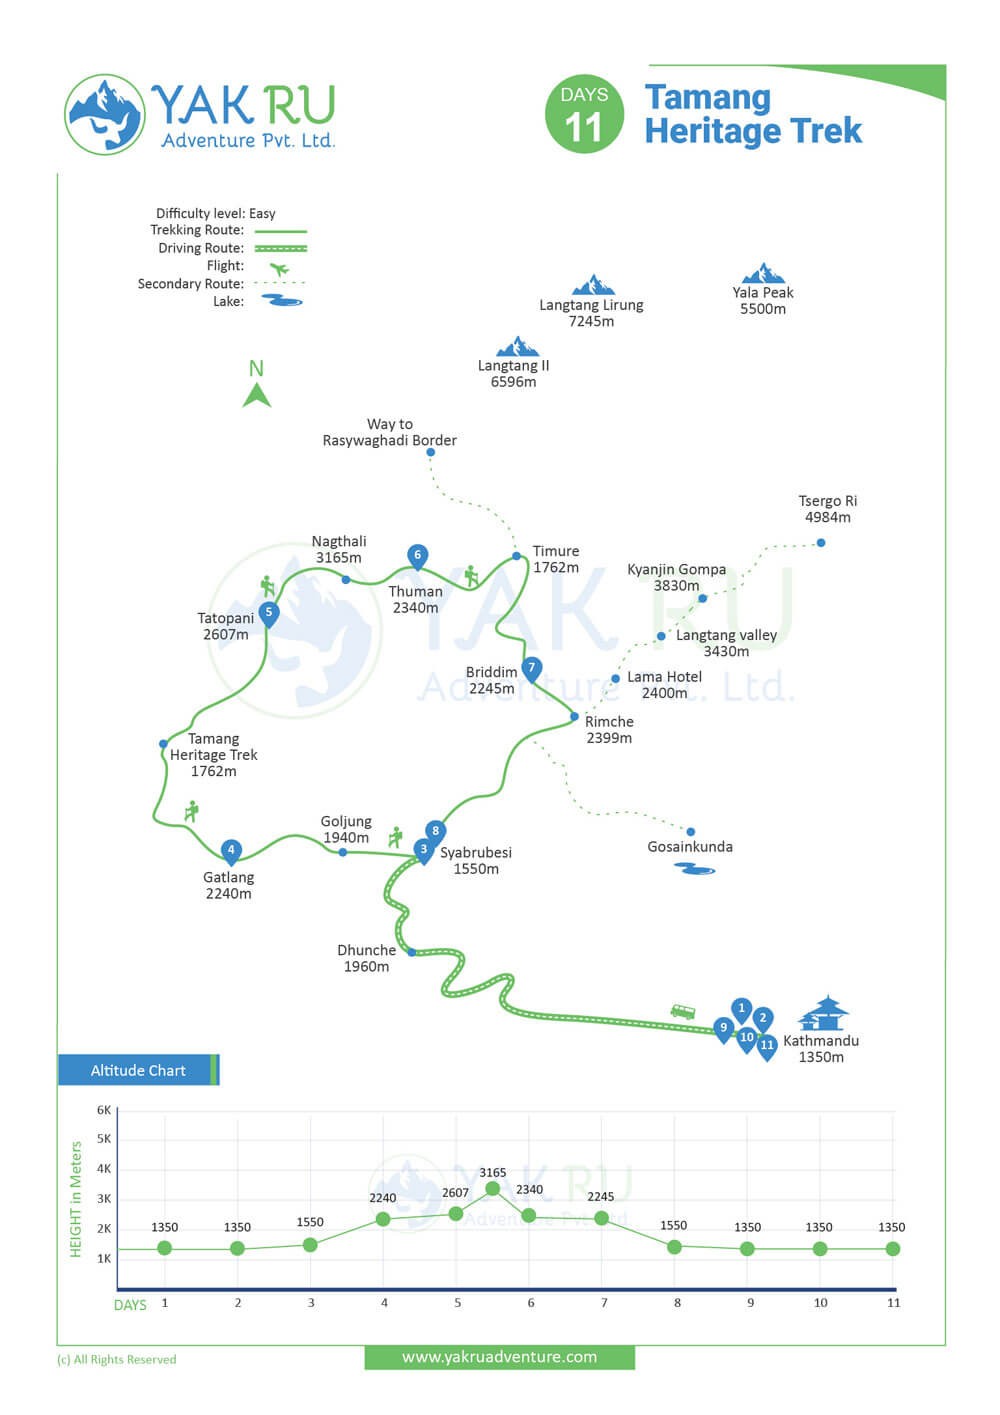 Tamang Heritage Trail Trek map